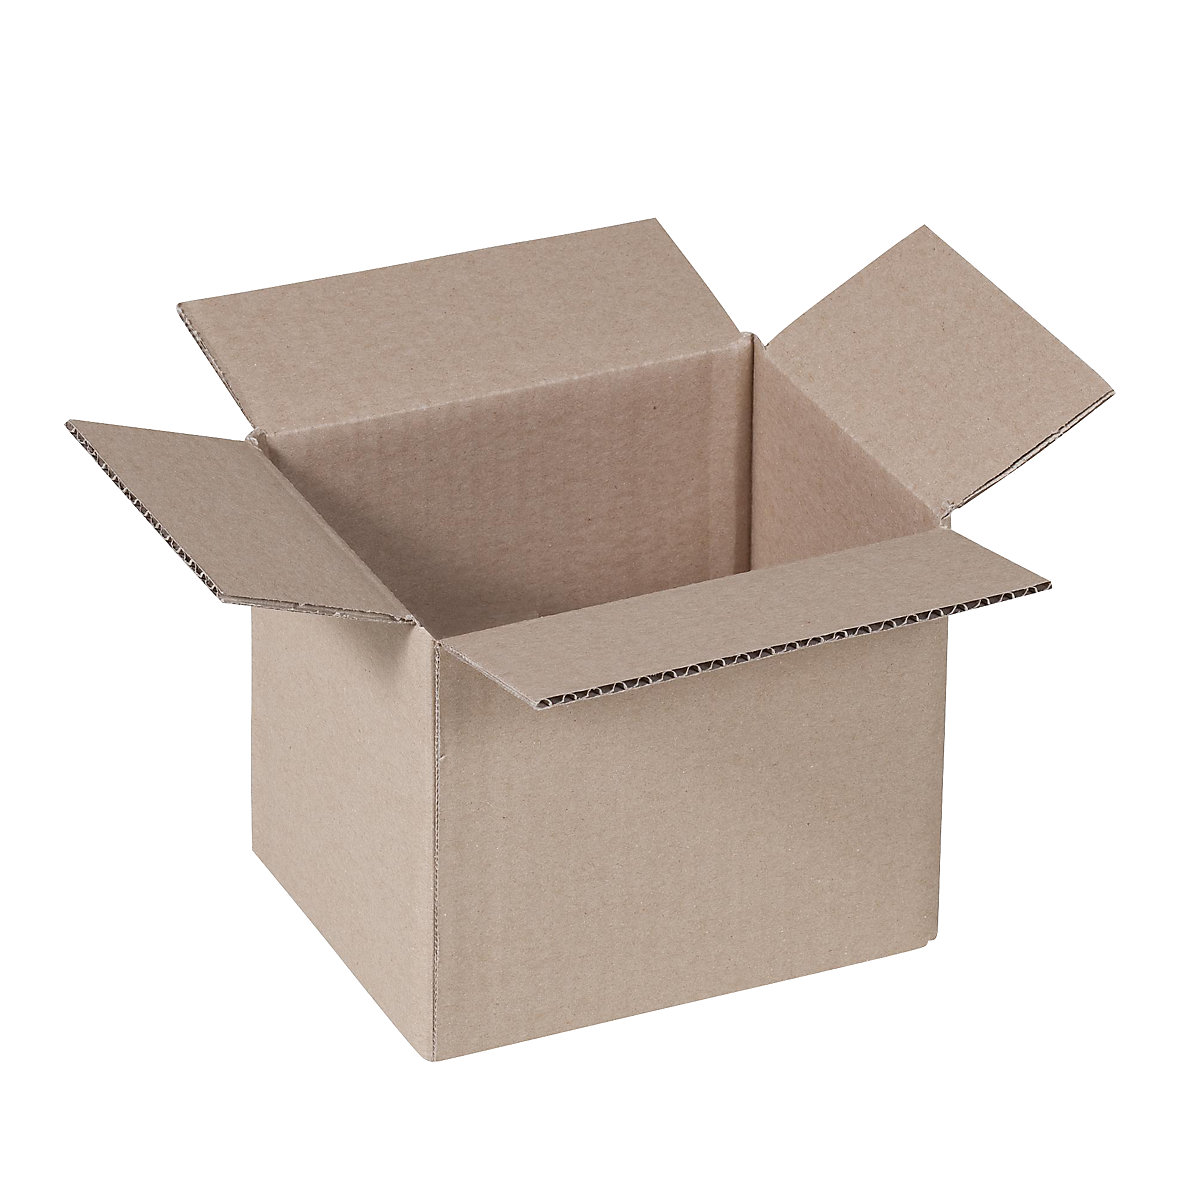 Folding cardboard box, FEFCO 0201, made of single fluted cardboard, internal dimensions 180 x 130 x 120 mm, pack of 50-33